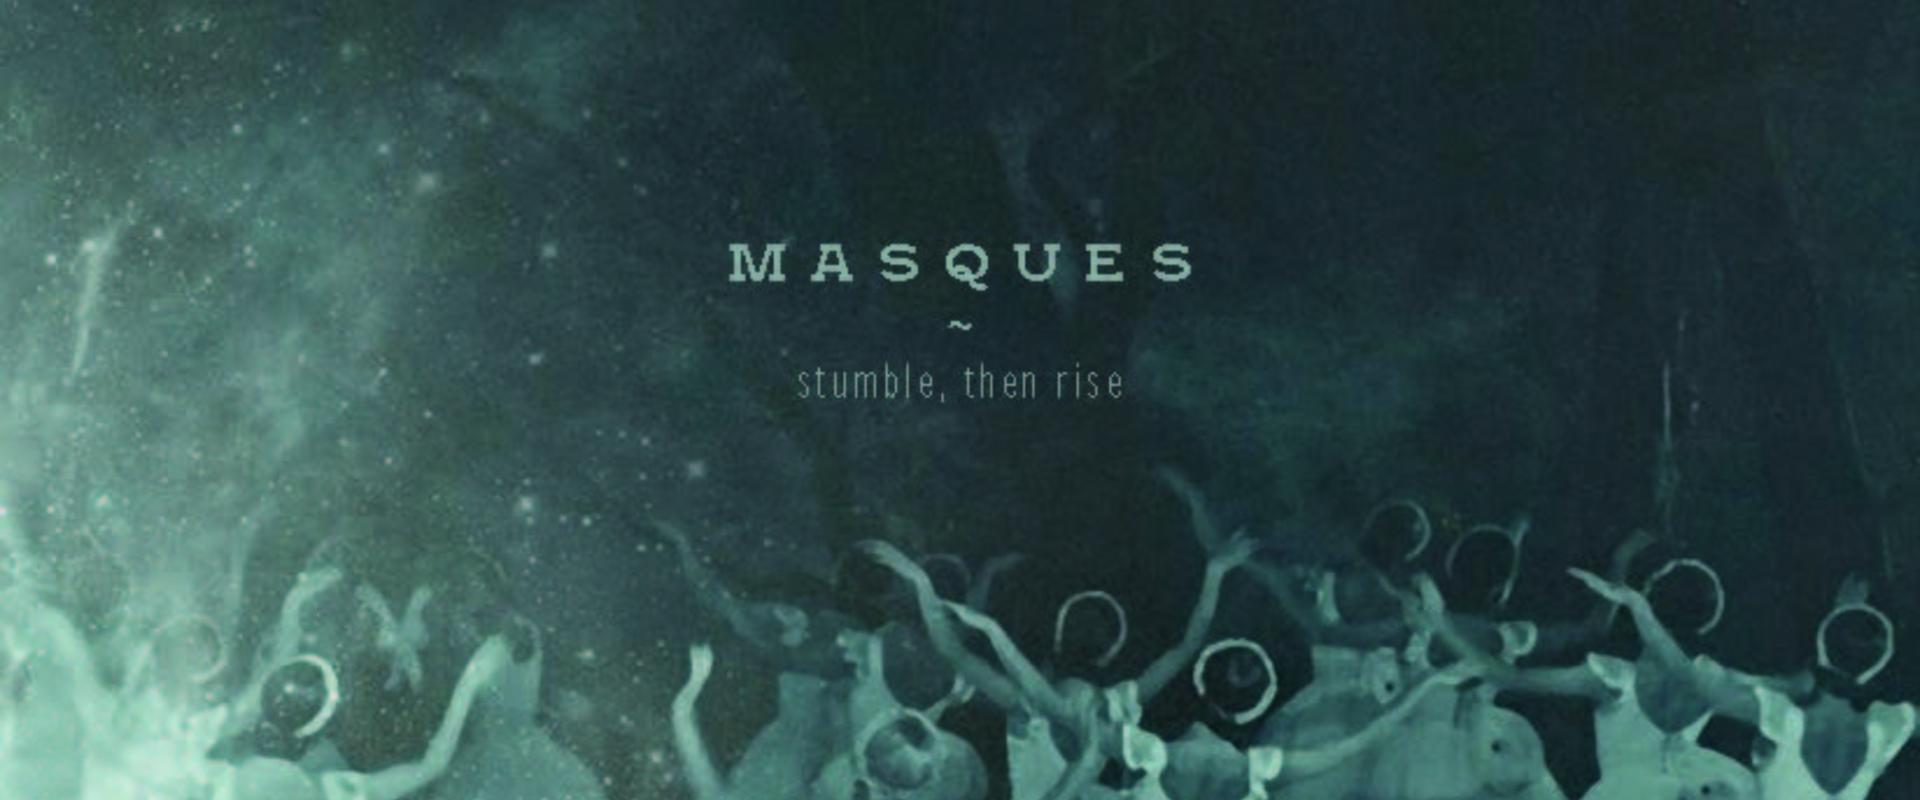 Masques - Stumble, then rise